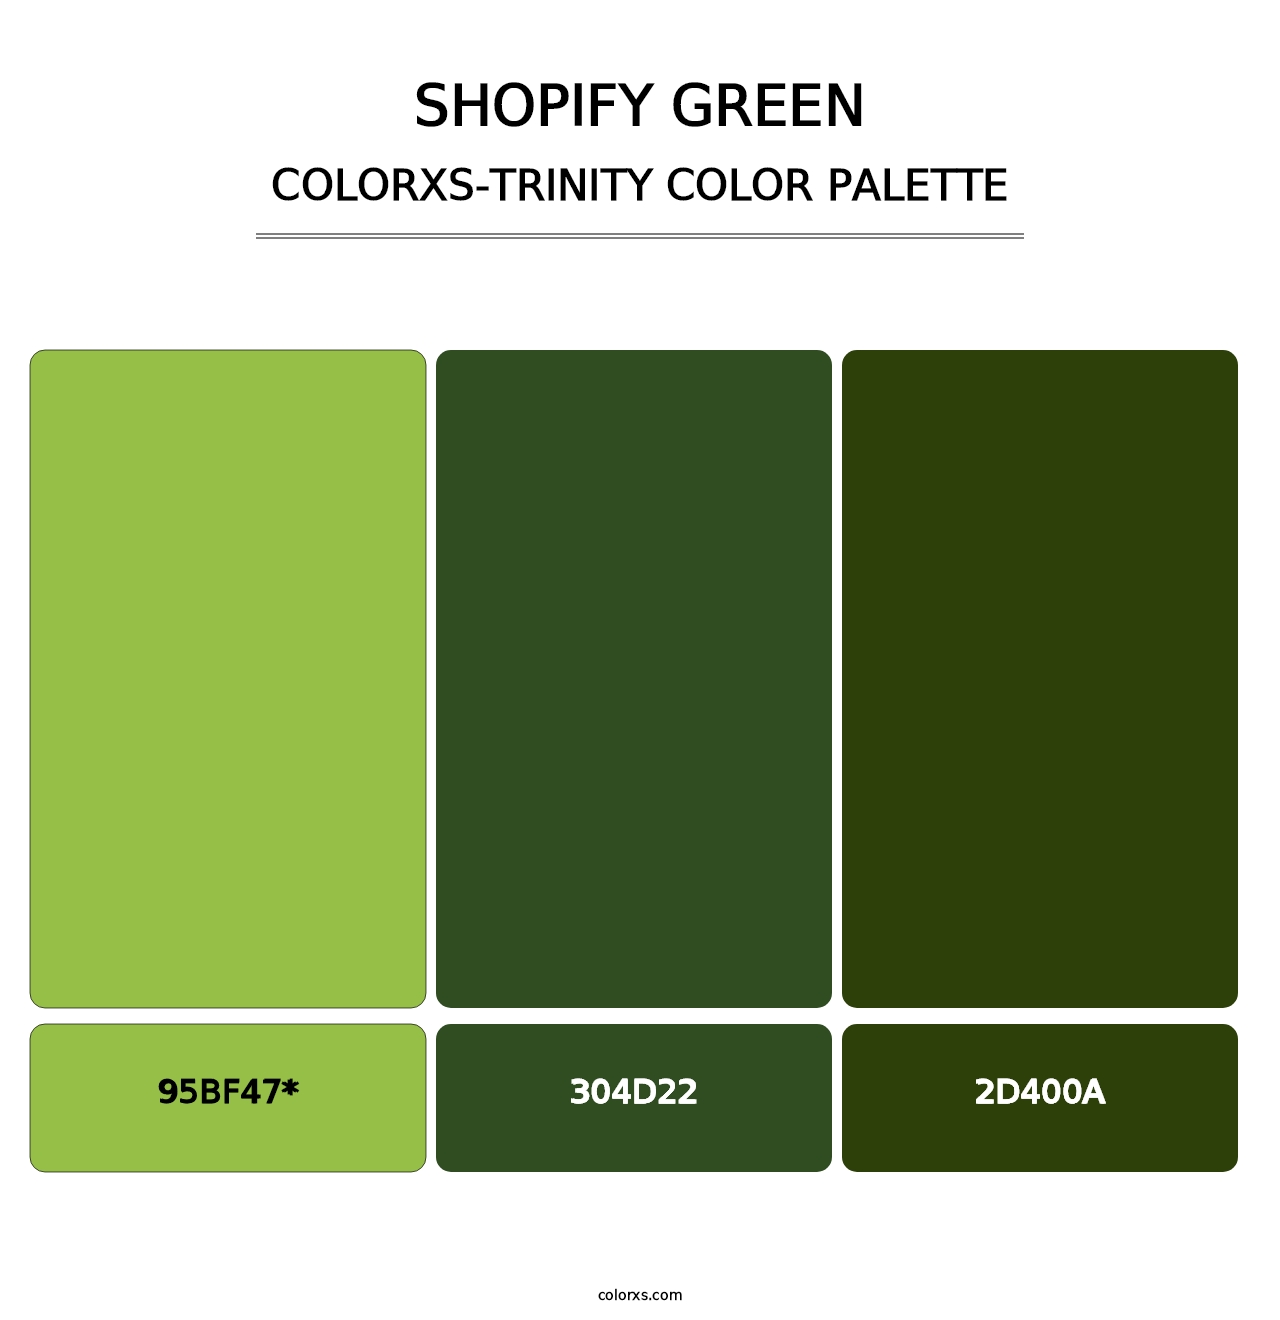 Shopify Green - Colorxs Trinity Palette